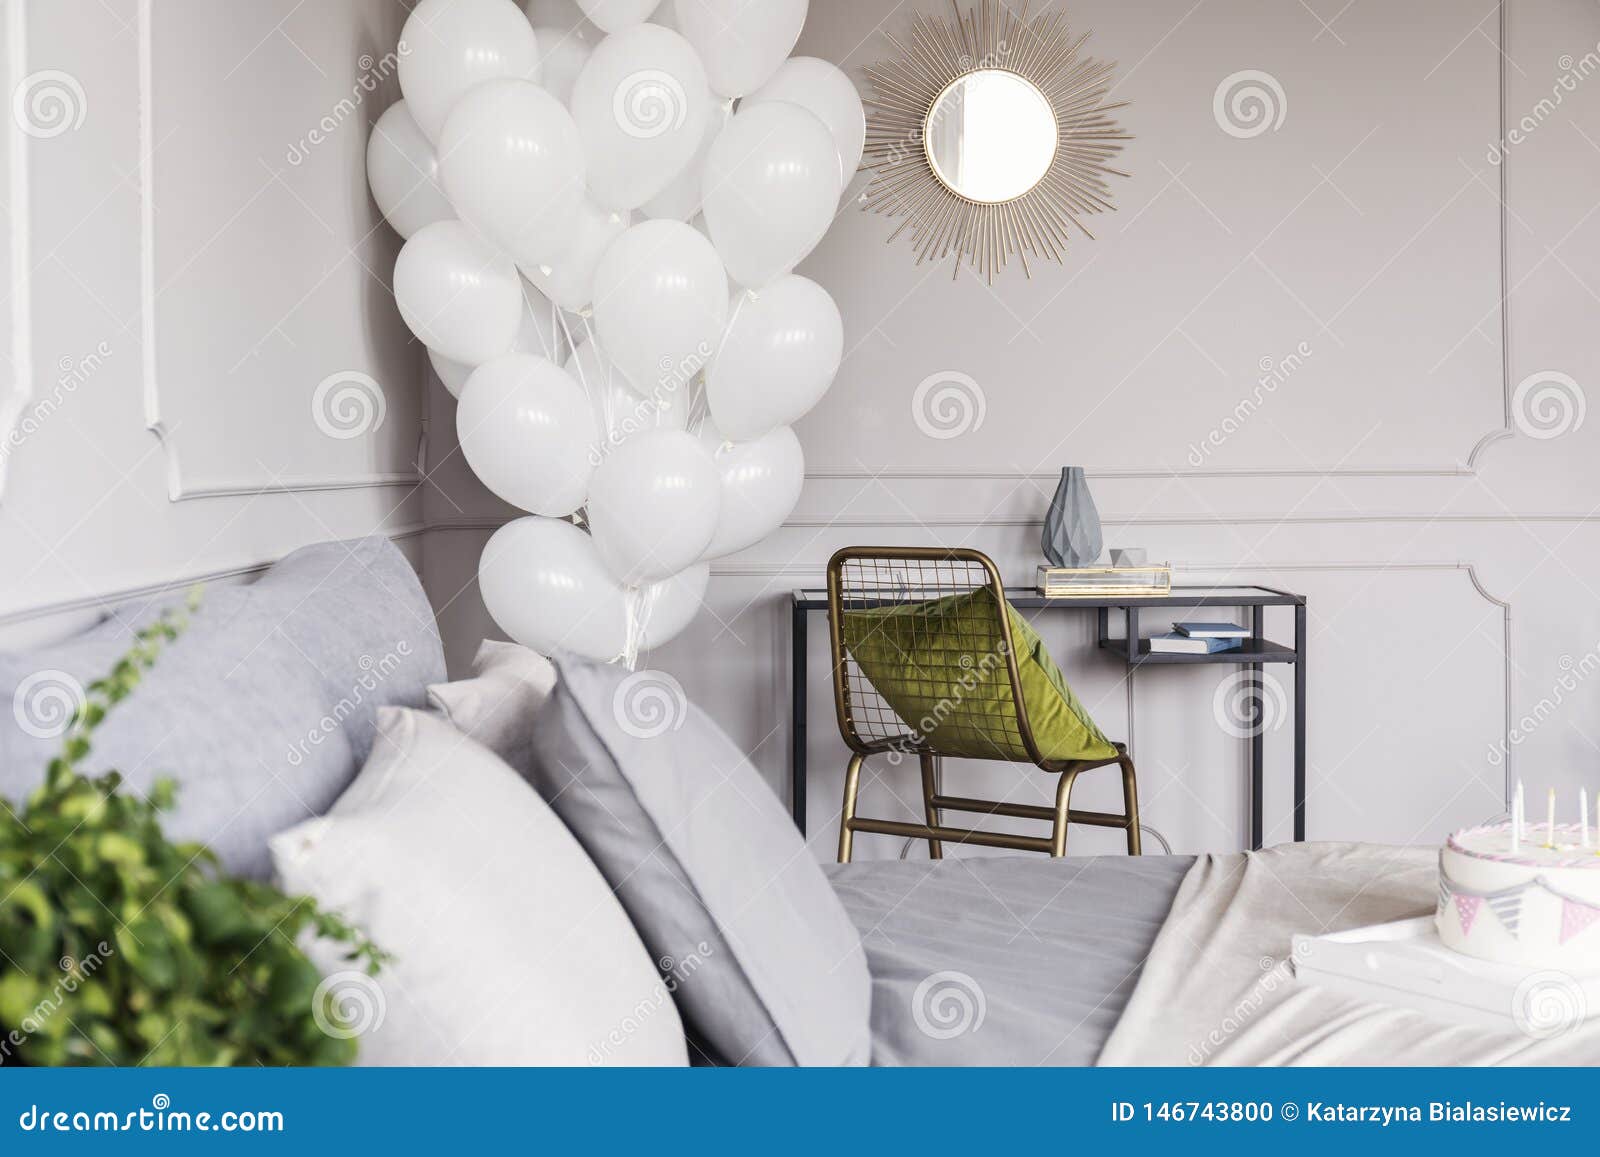 Bunch Of Balloons In Trendy Bedroom Interior With Industrial